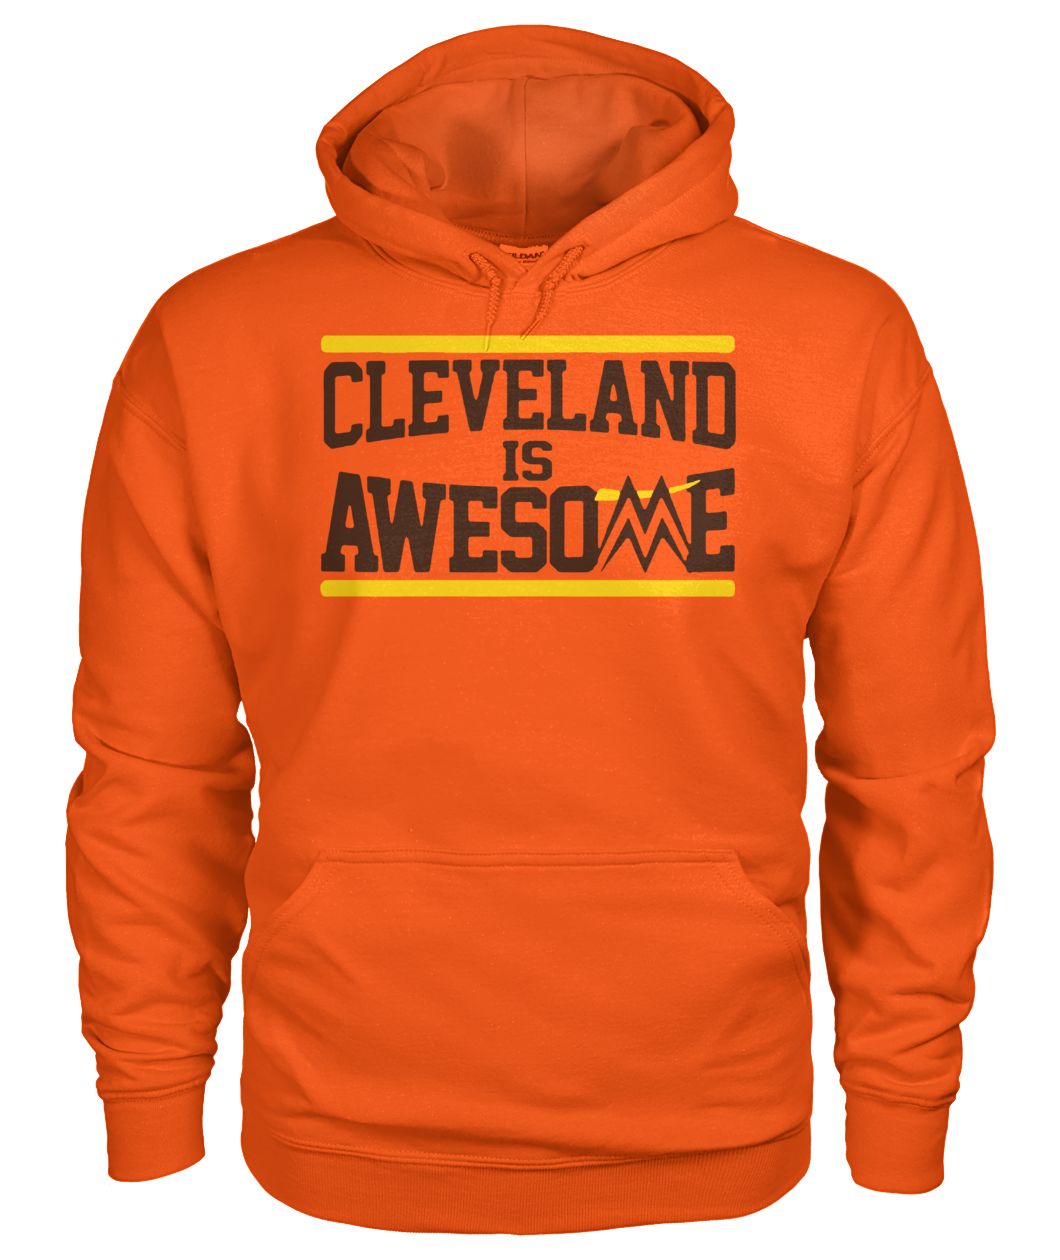 Cleveland is awesome miz gildan hoodie